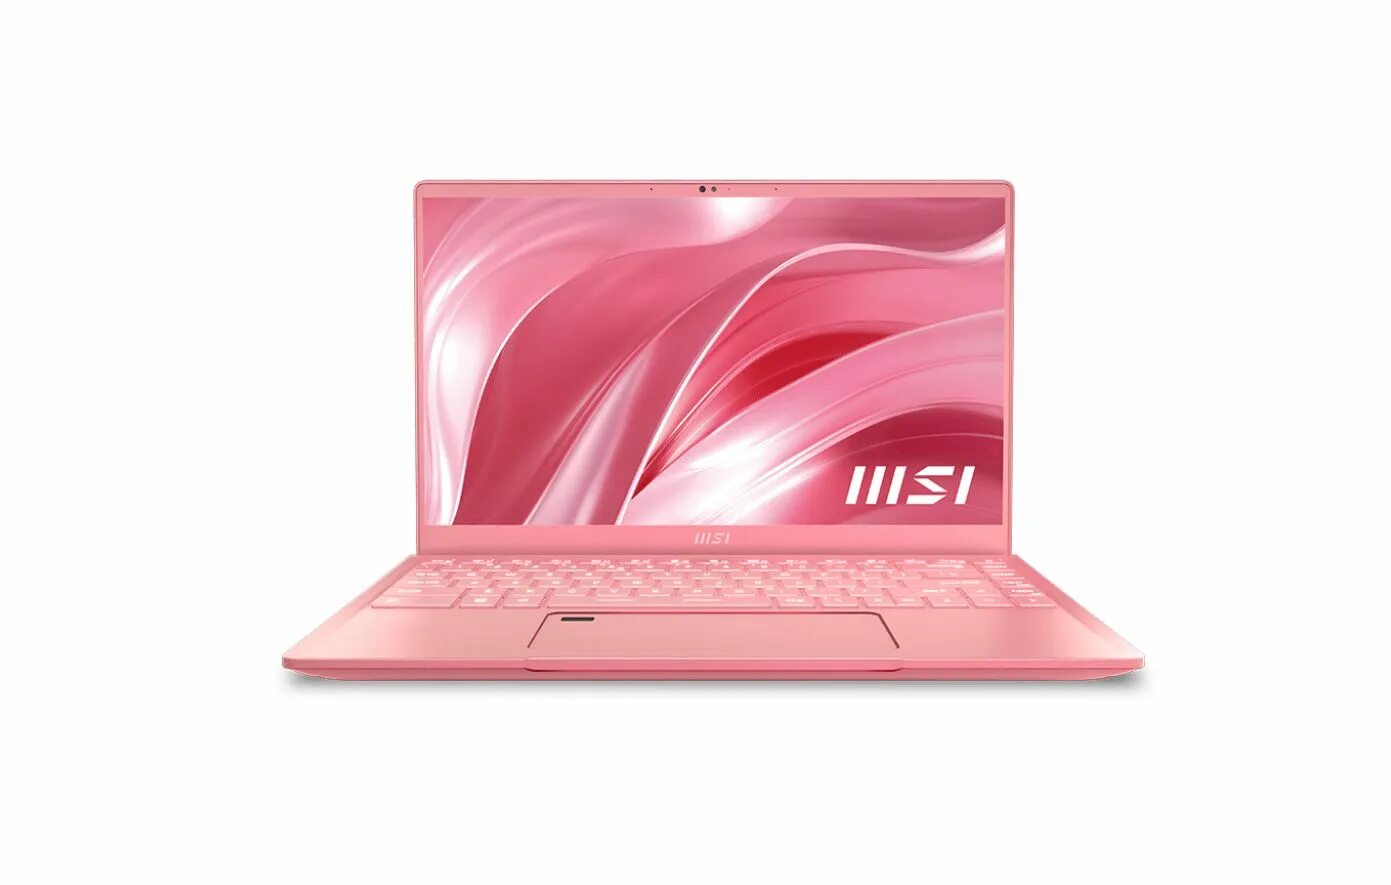 Ноутбук MSI Prestige 14. MSI Prestige 14 Pink. 14" Ультрабук MSI Prestige 14 a11sb-639ru розовый. MSI Prestige 14 a10sc. Купить ноутбук в улан